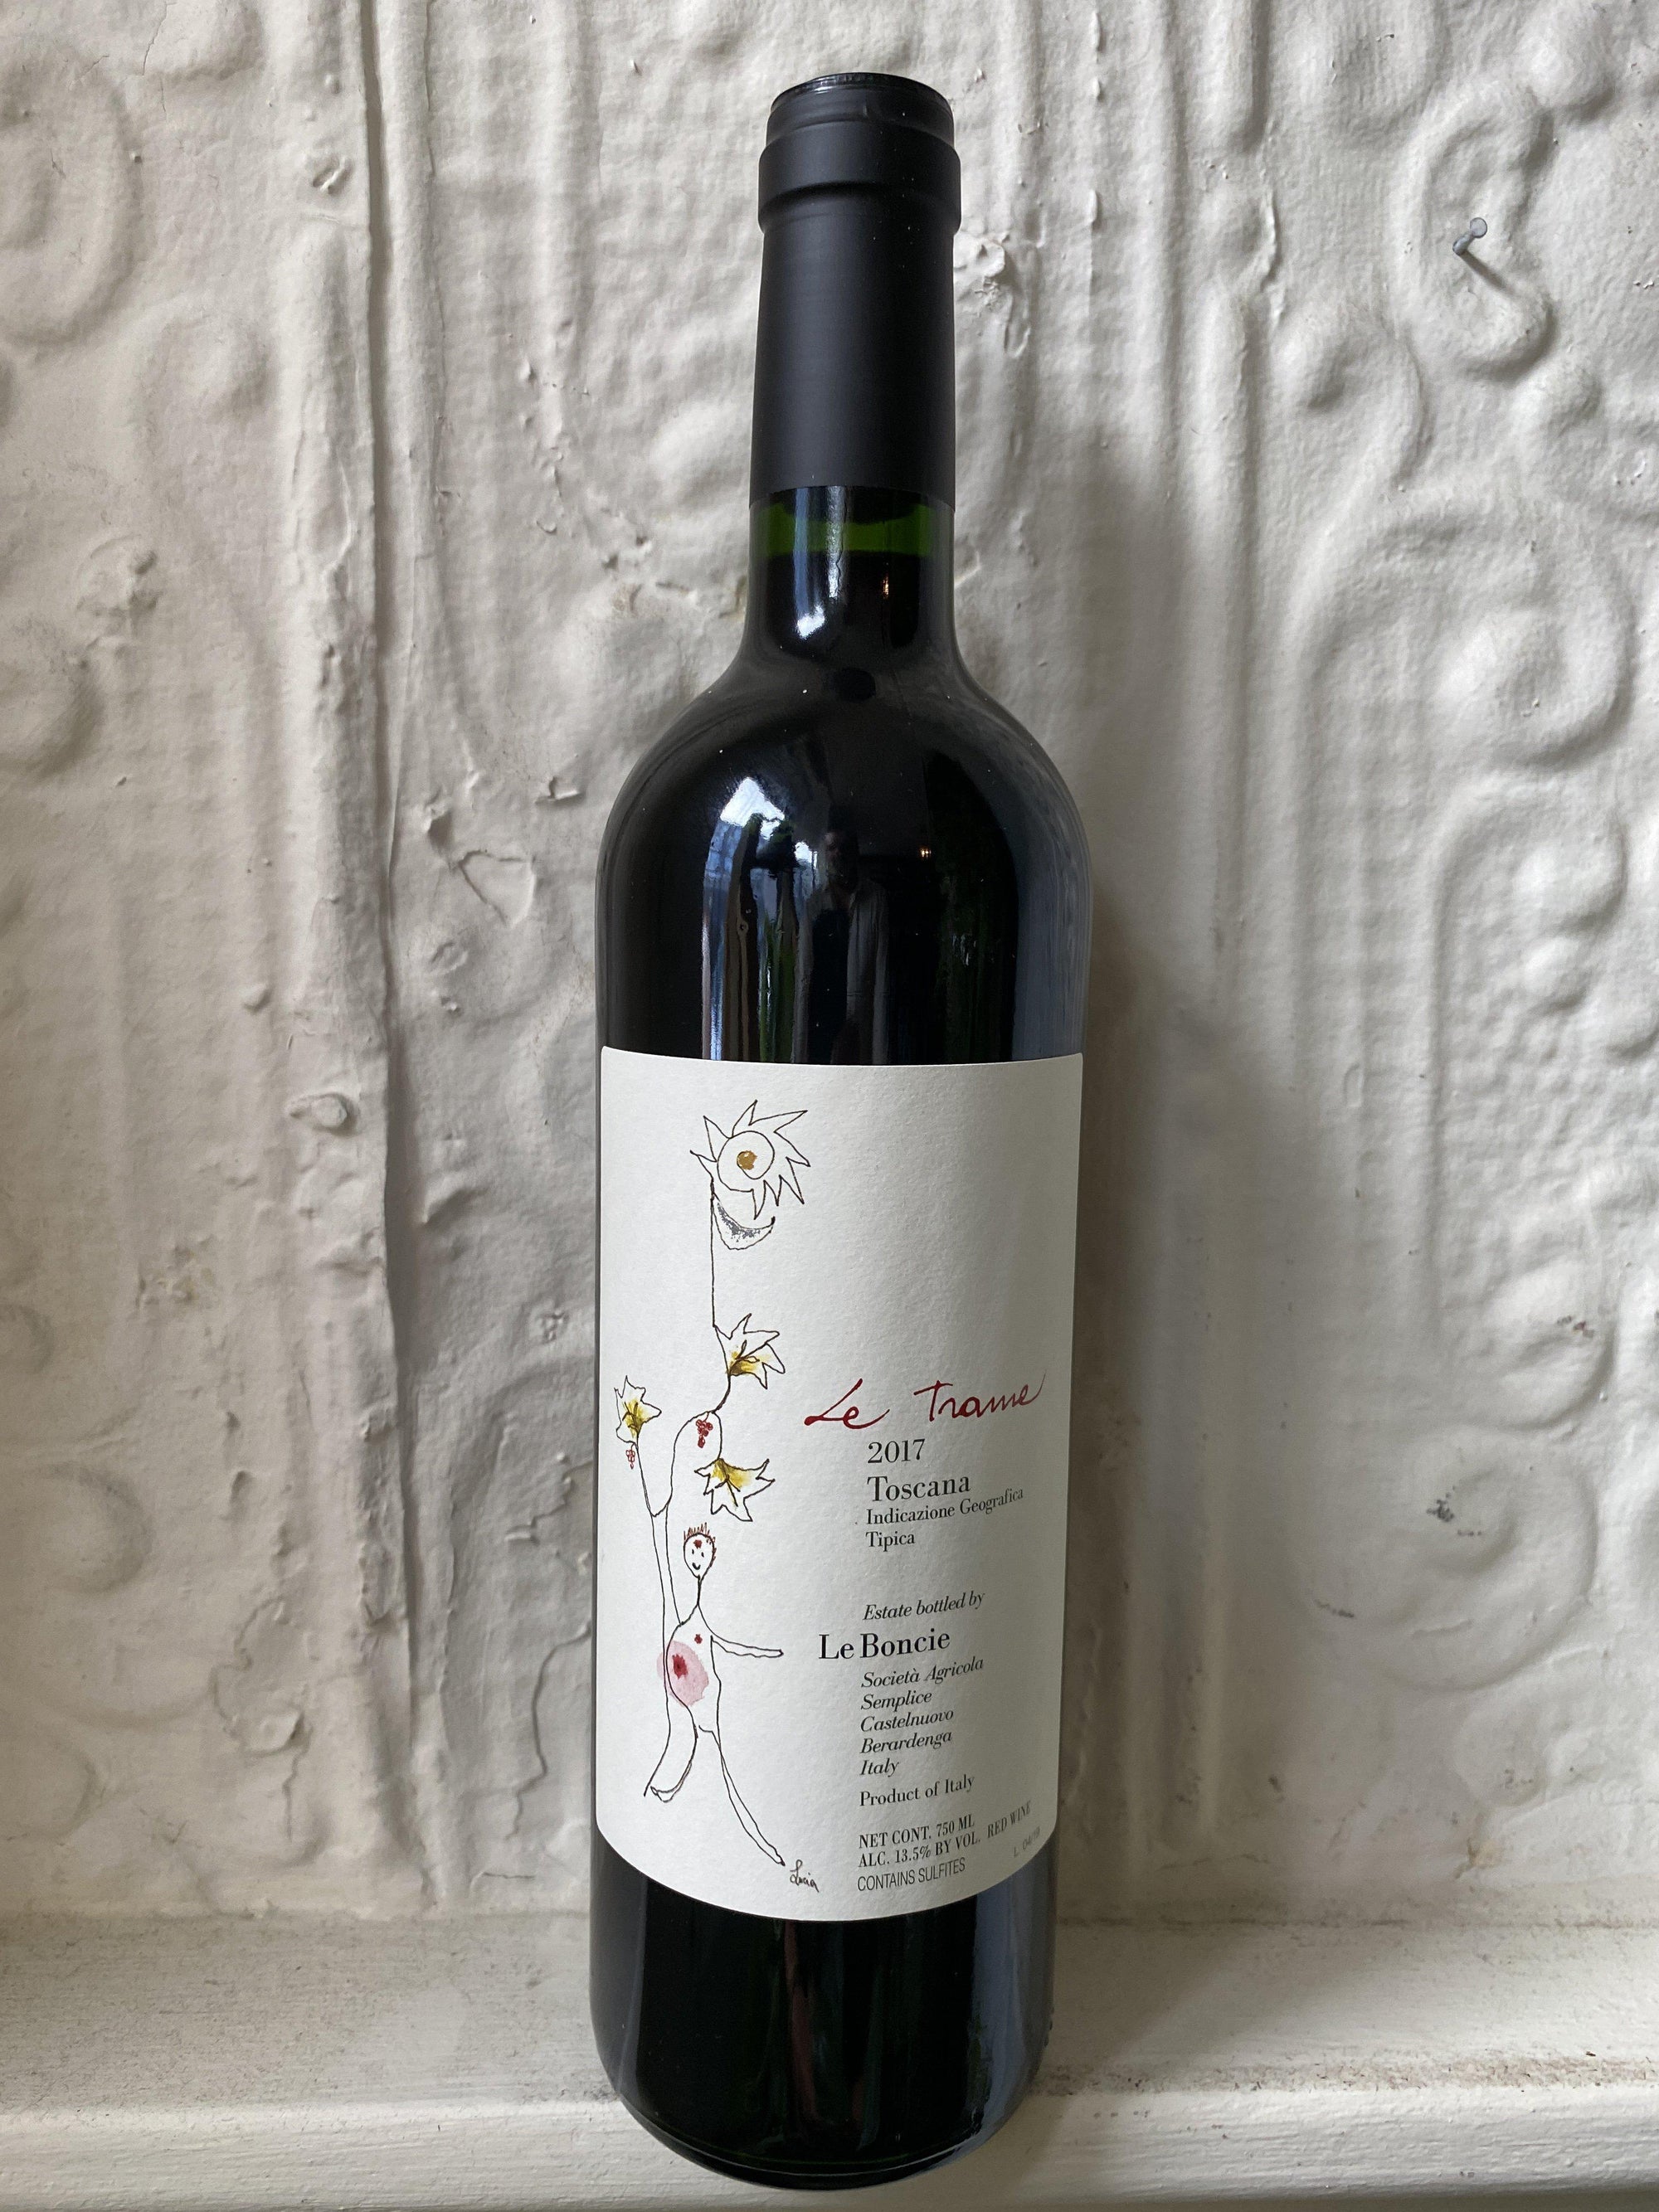 Rosso di Toscana "Le Trame", Podere Le Boncie 2017 (Tuscany)-Wine-Bibber & Bell